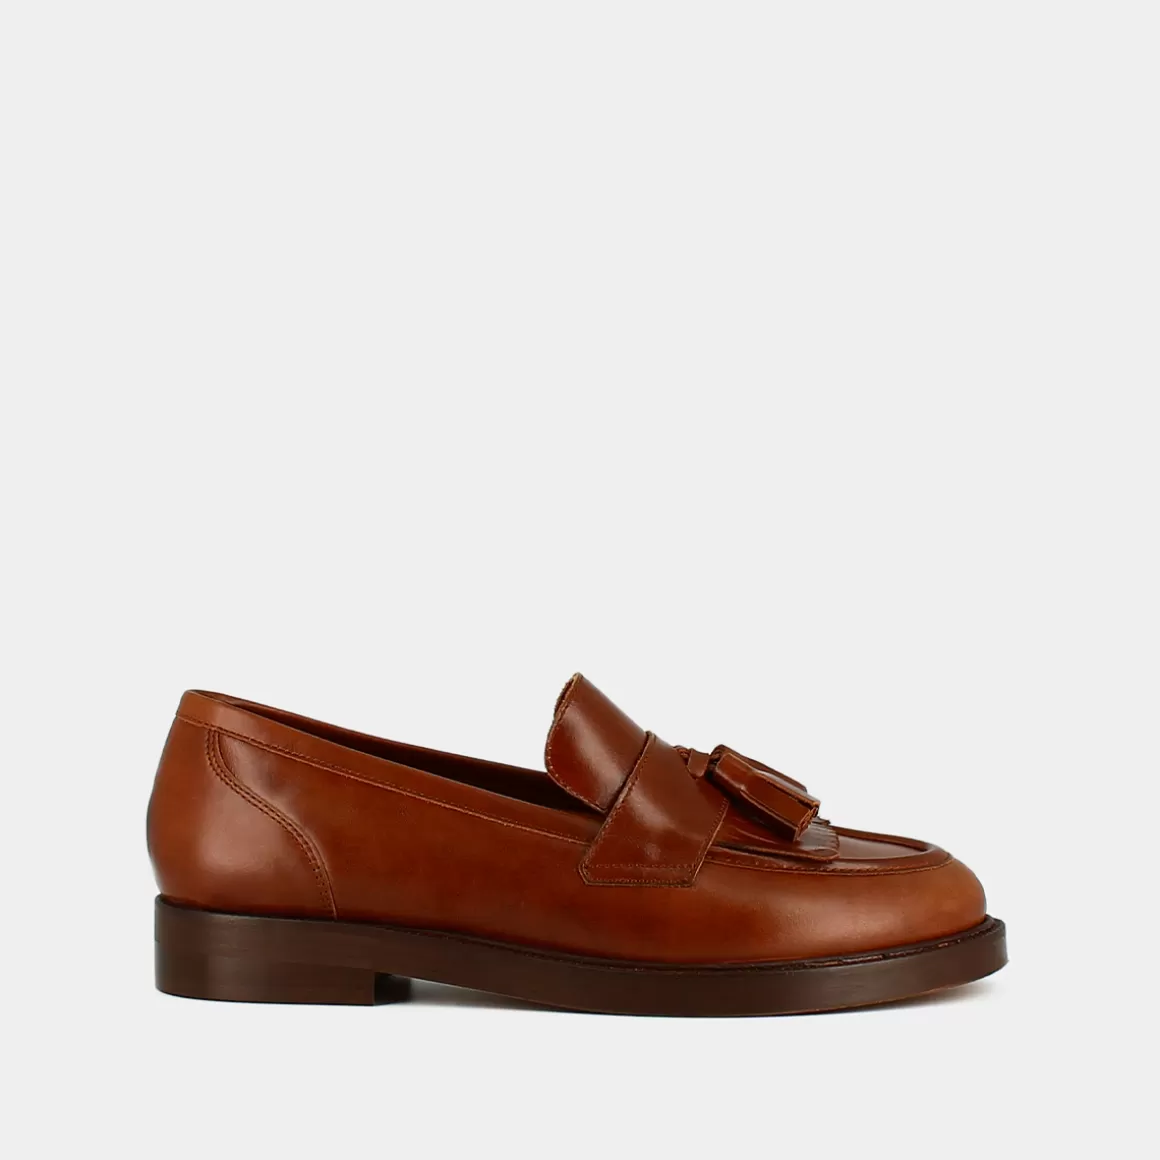 Flat-heeled loafers with tassels<Jonak Sale